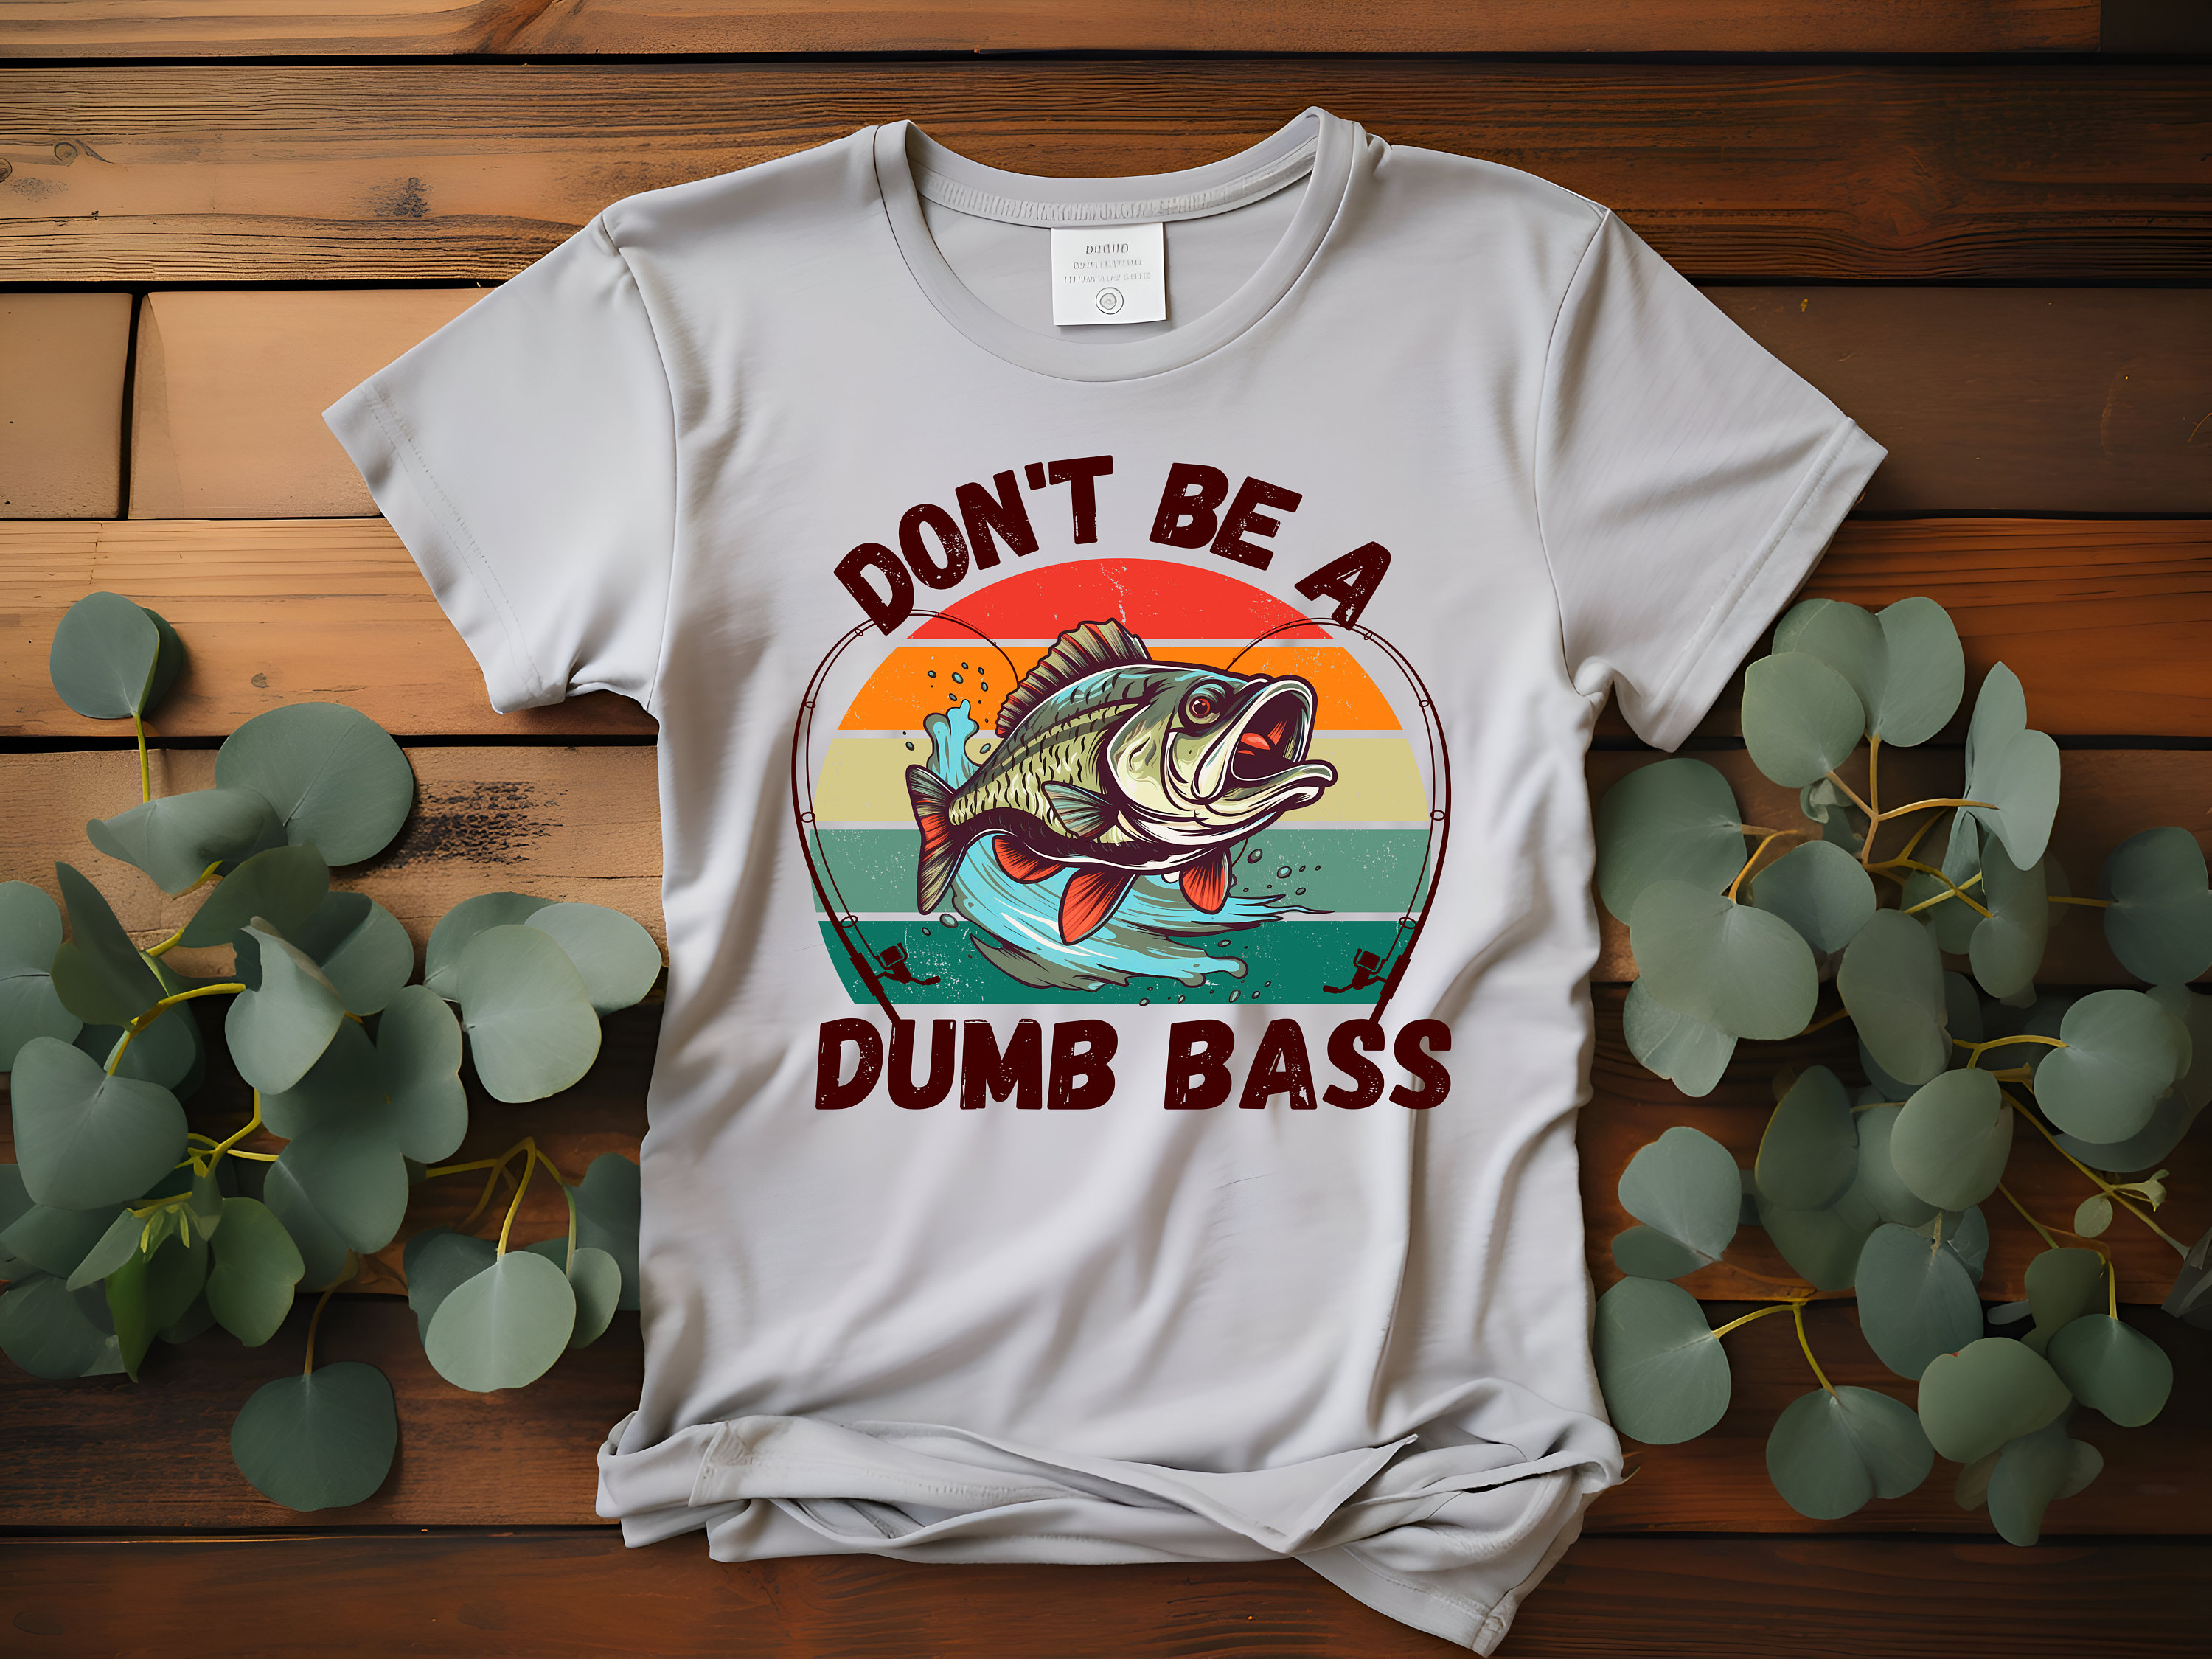 Don’t Be A Dumb Bass, Funny Fish Pun Outdoors Fishing Meme